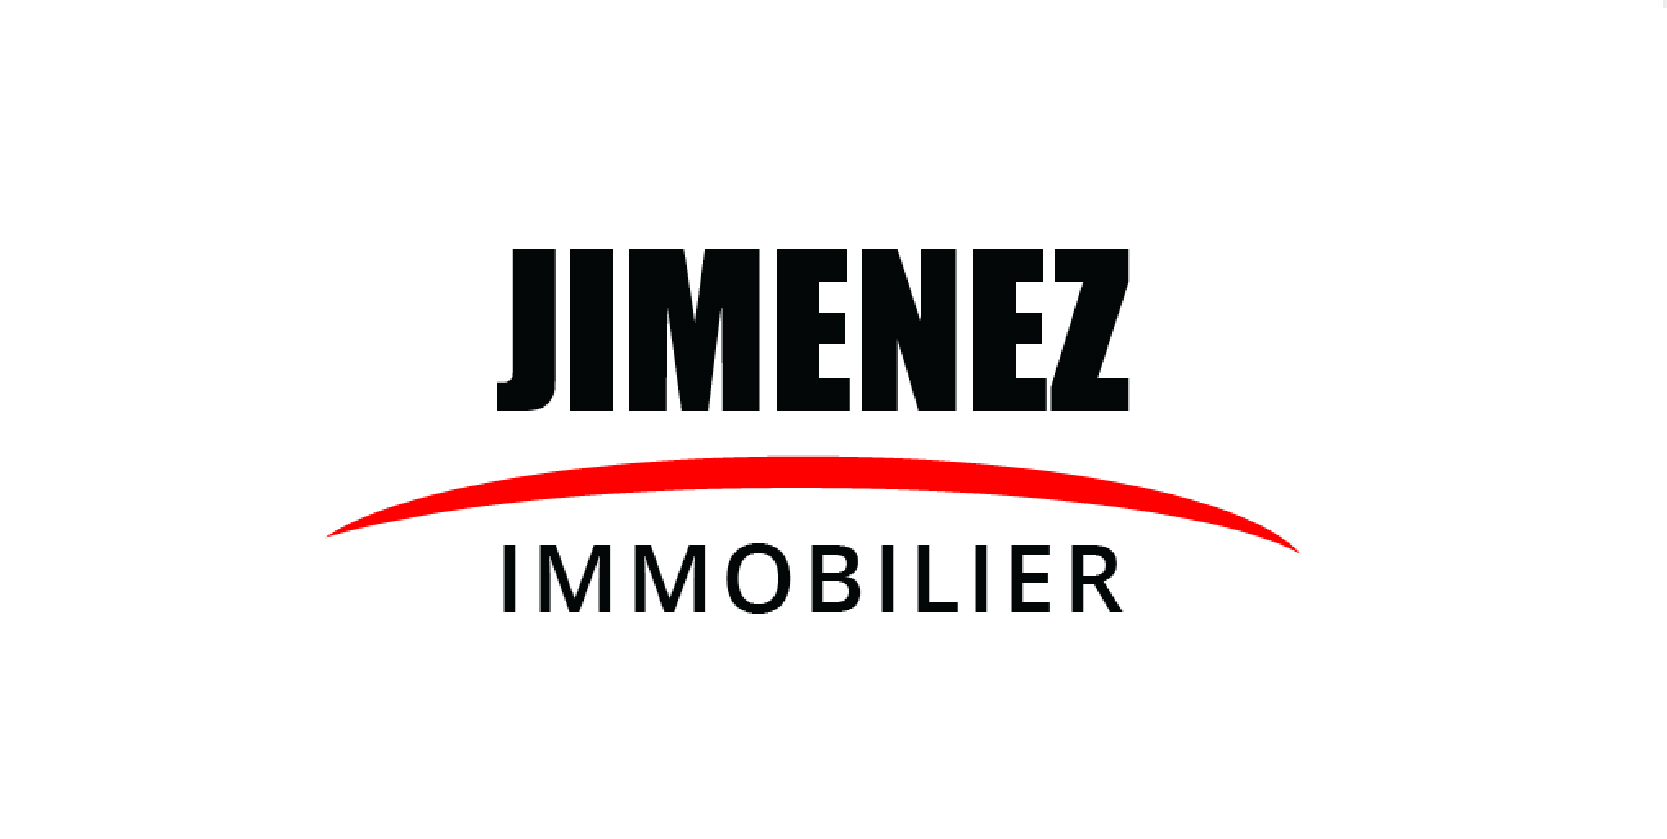 Jimenez